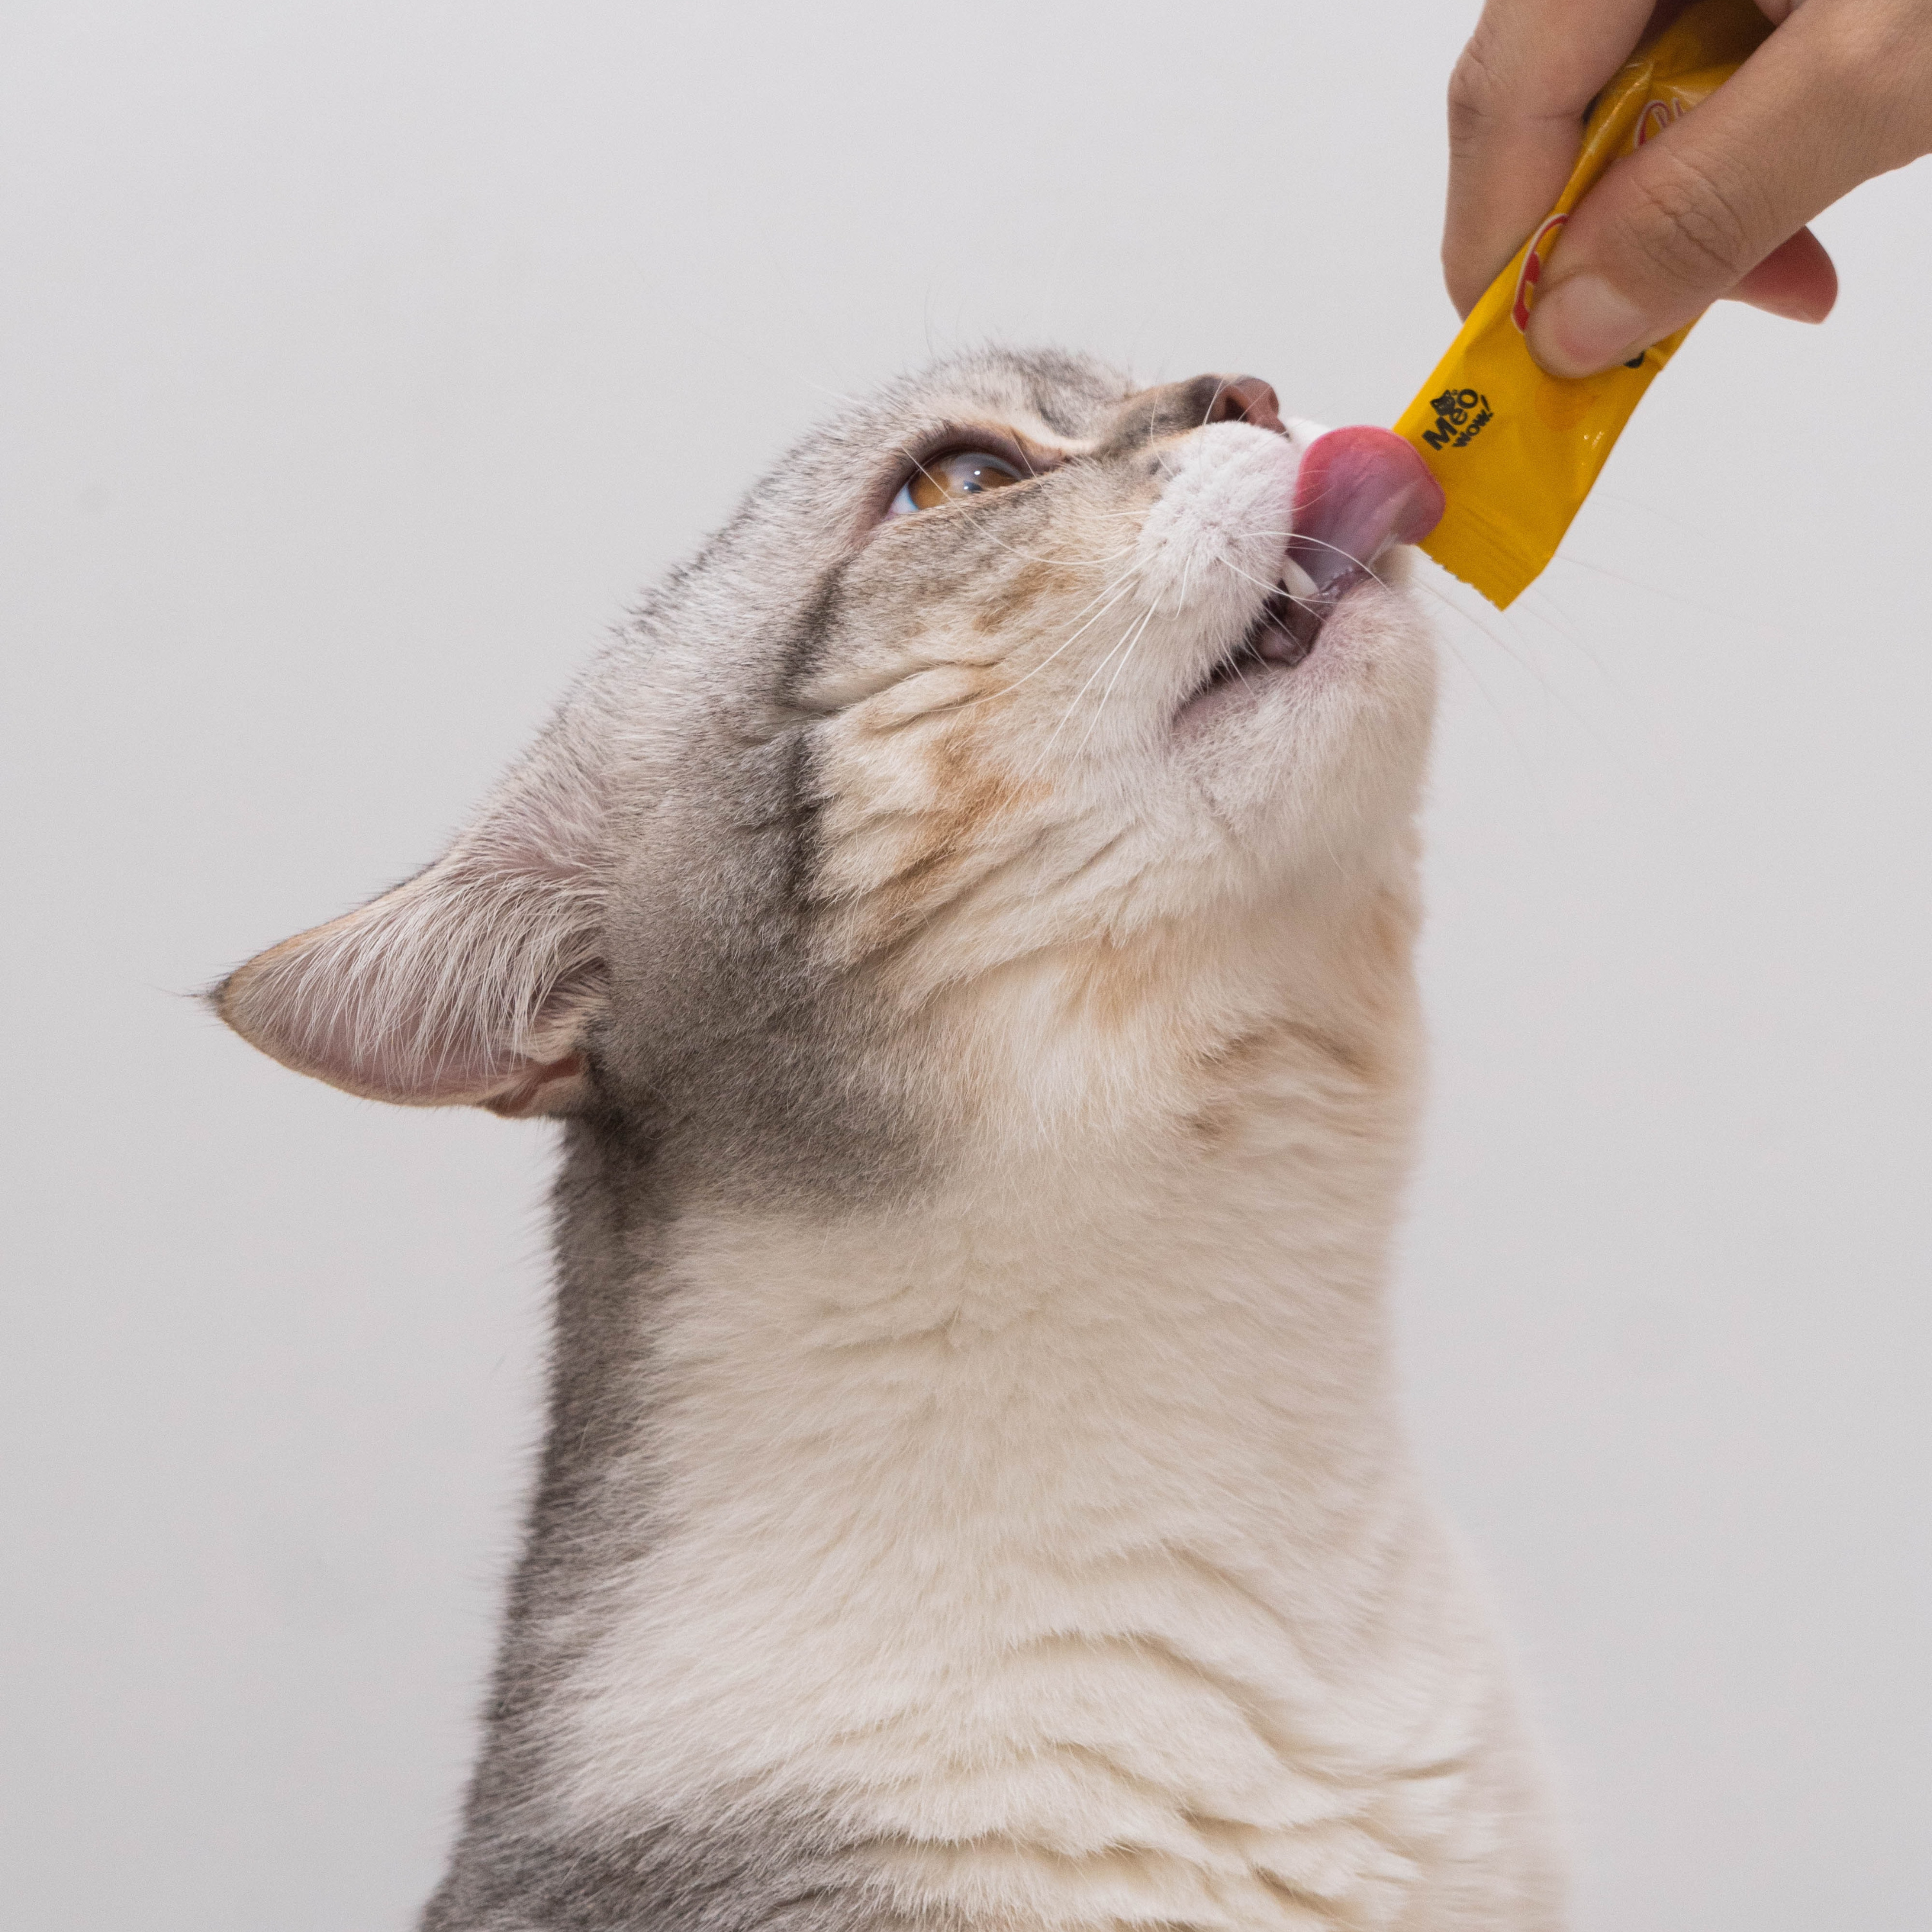 Taste Test with your Feline